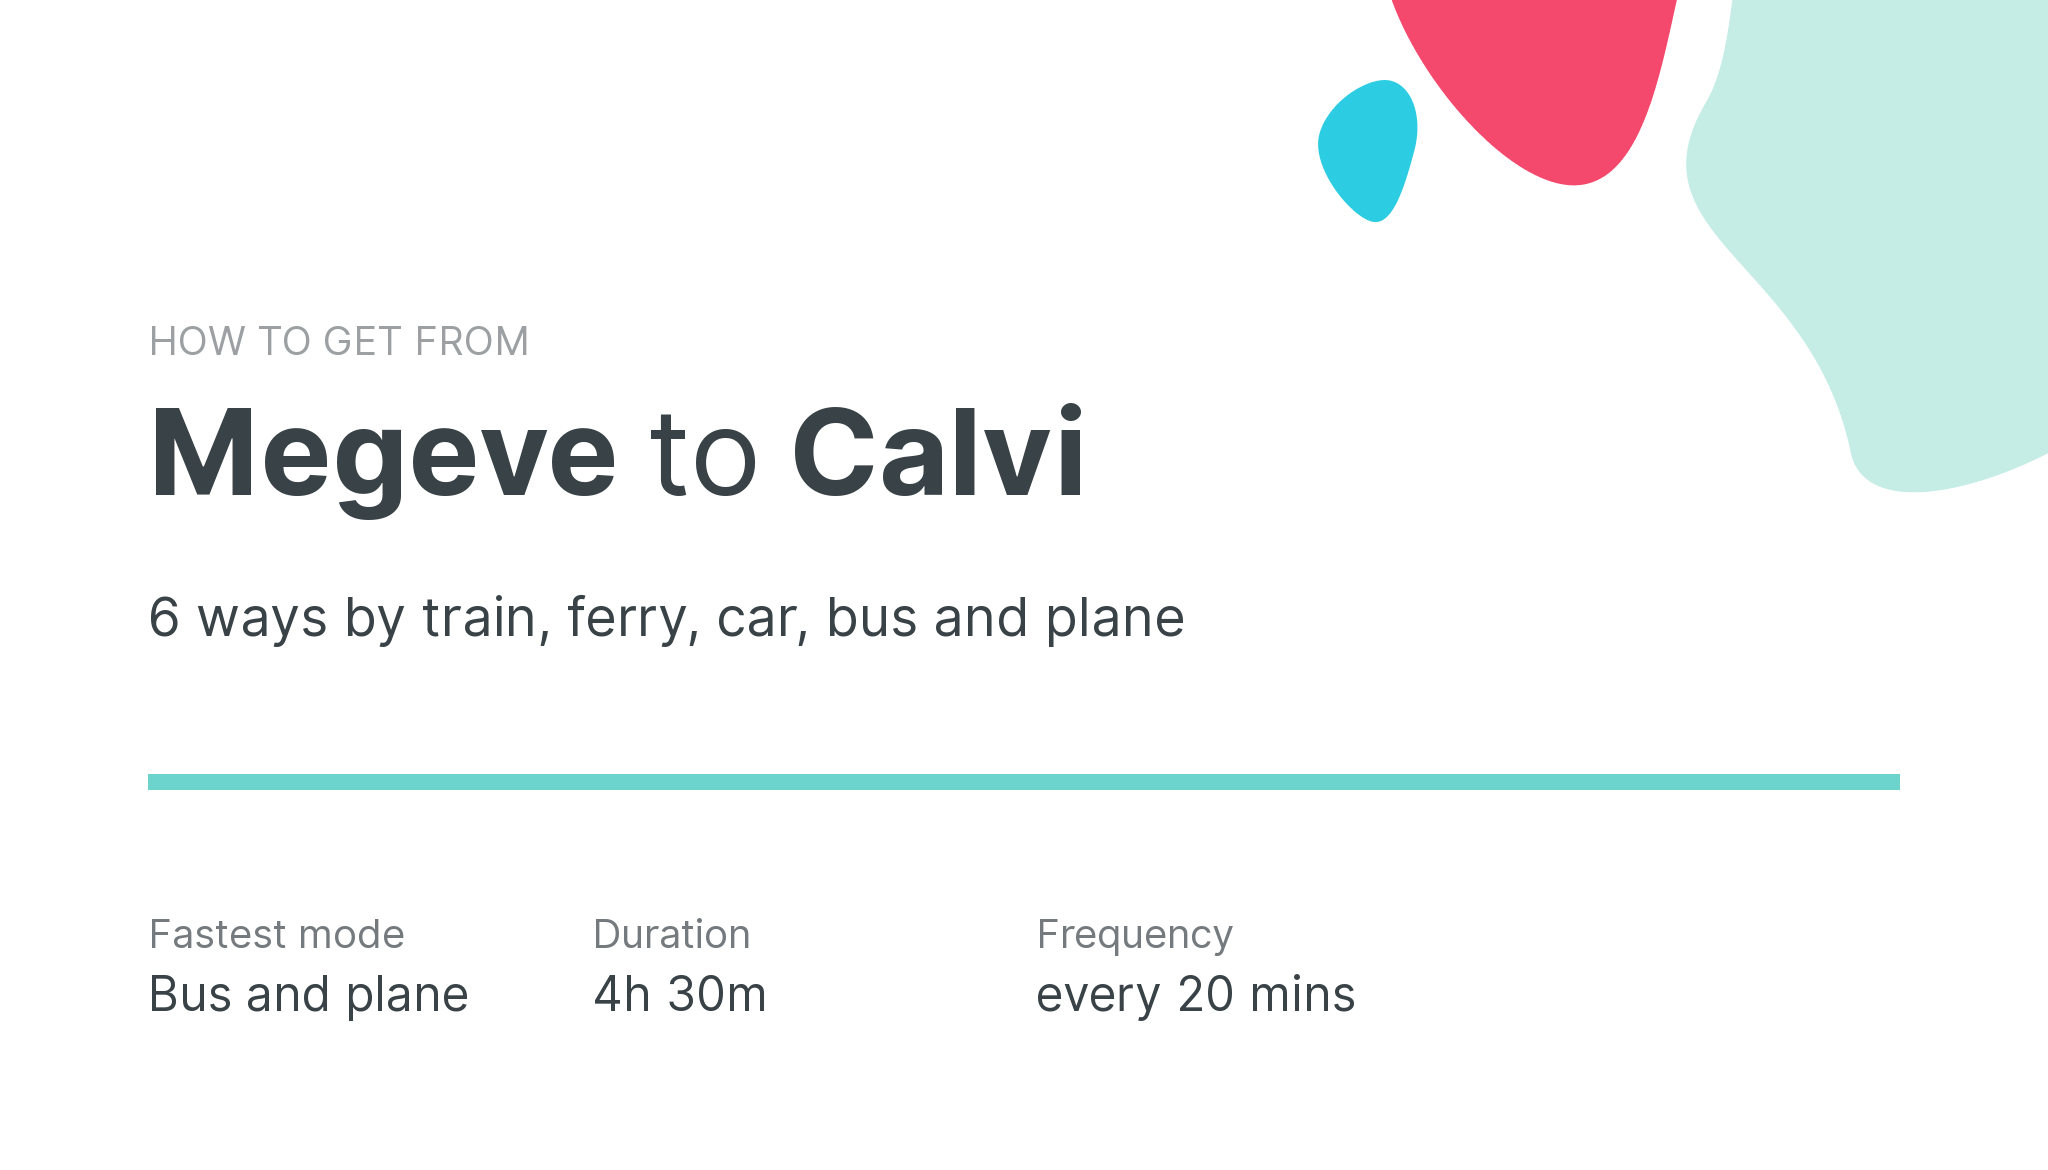 How do I get from Megeve to Calvi